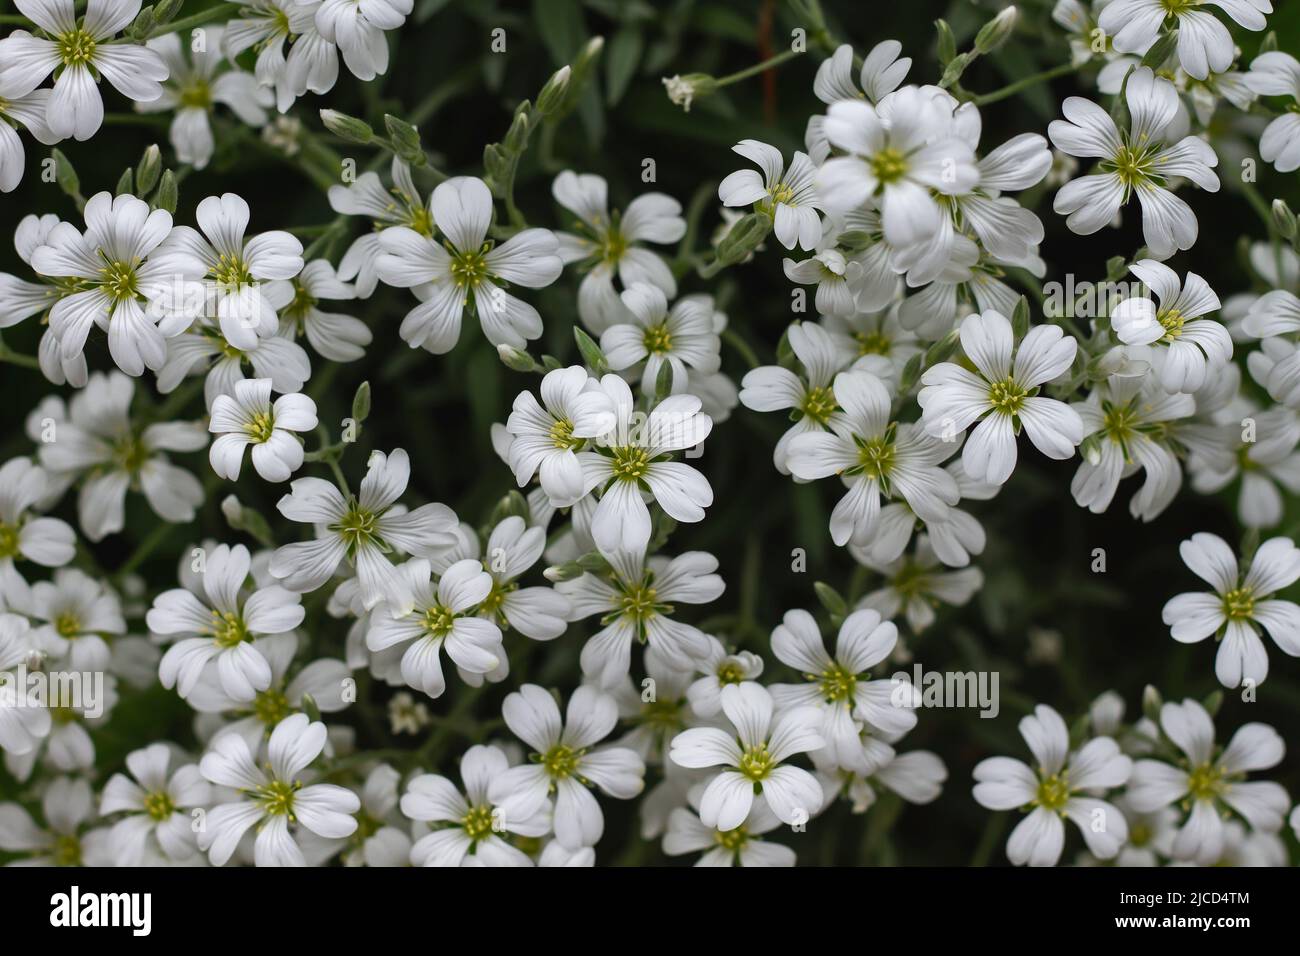 Cerastium tomentosum (snow in summer) ground cover plant white flowers Stock Photo